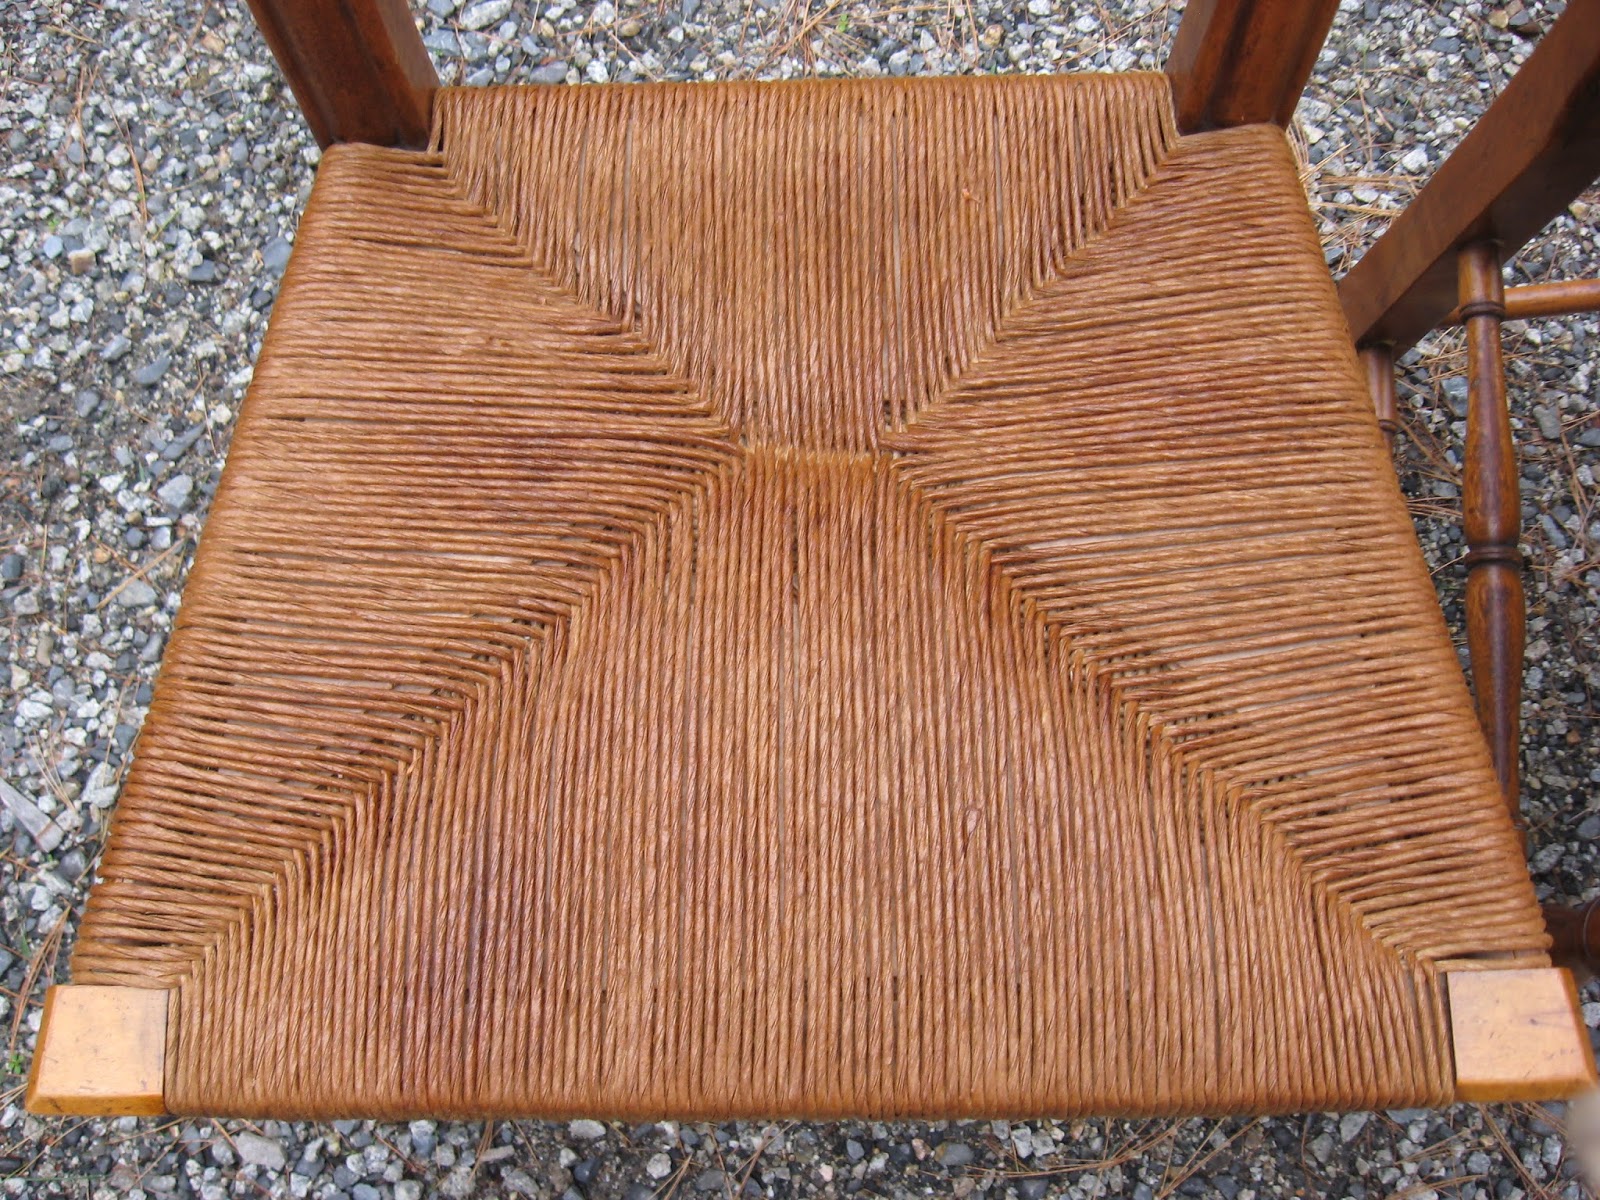 Maine Antique Chair Repair